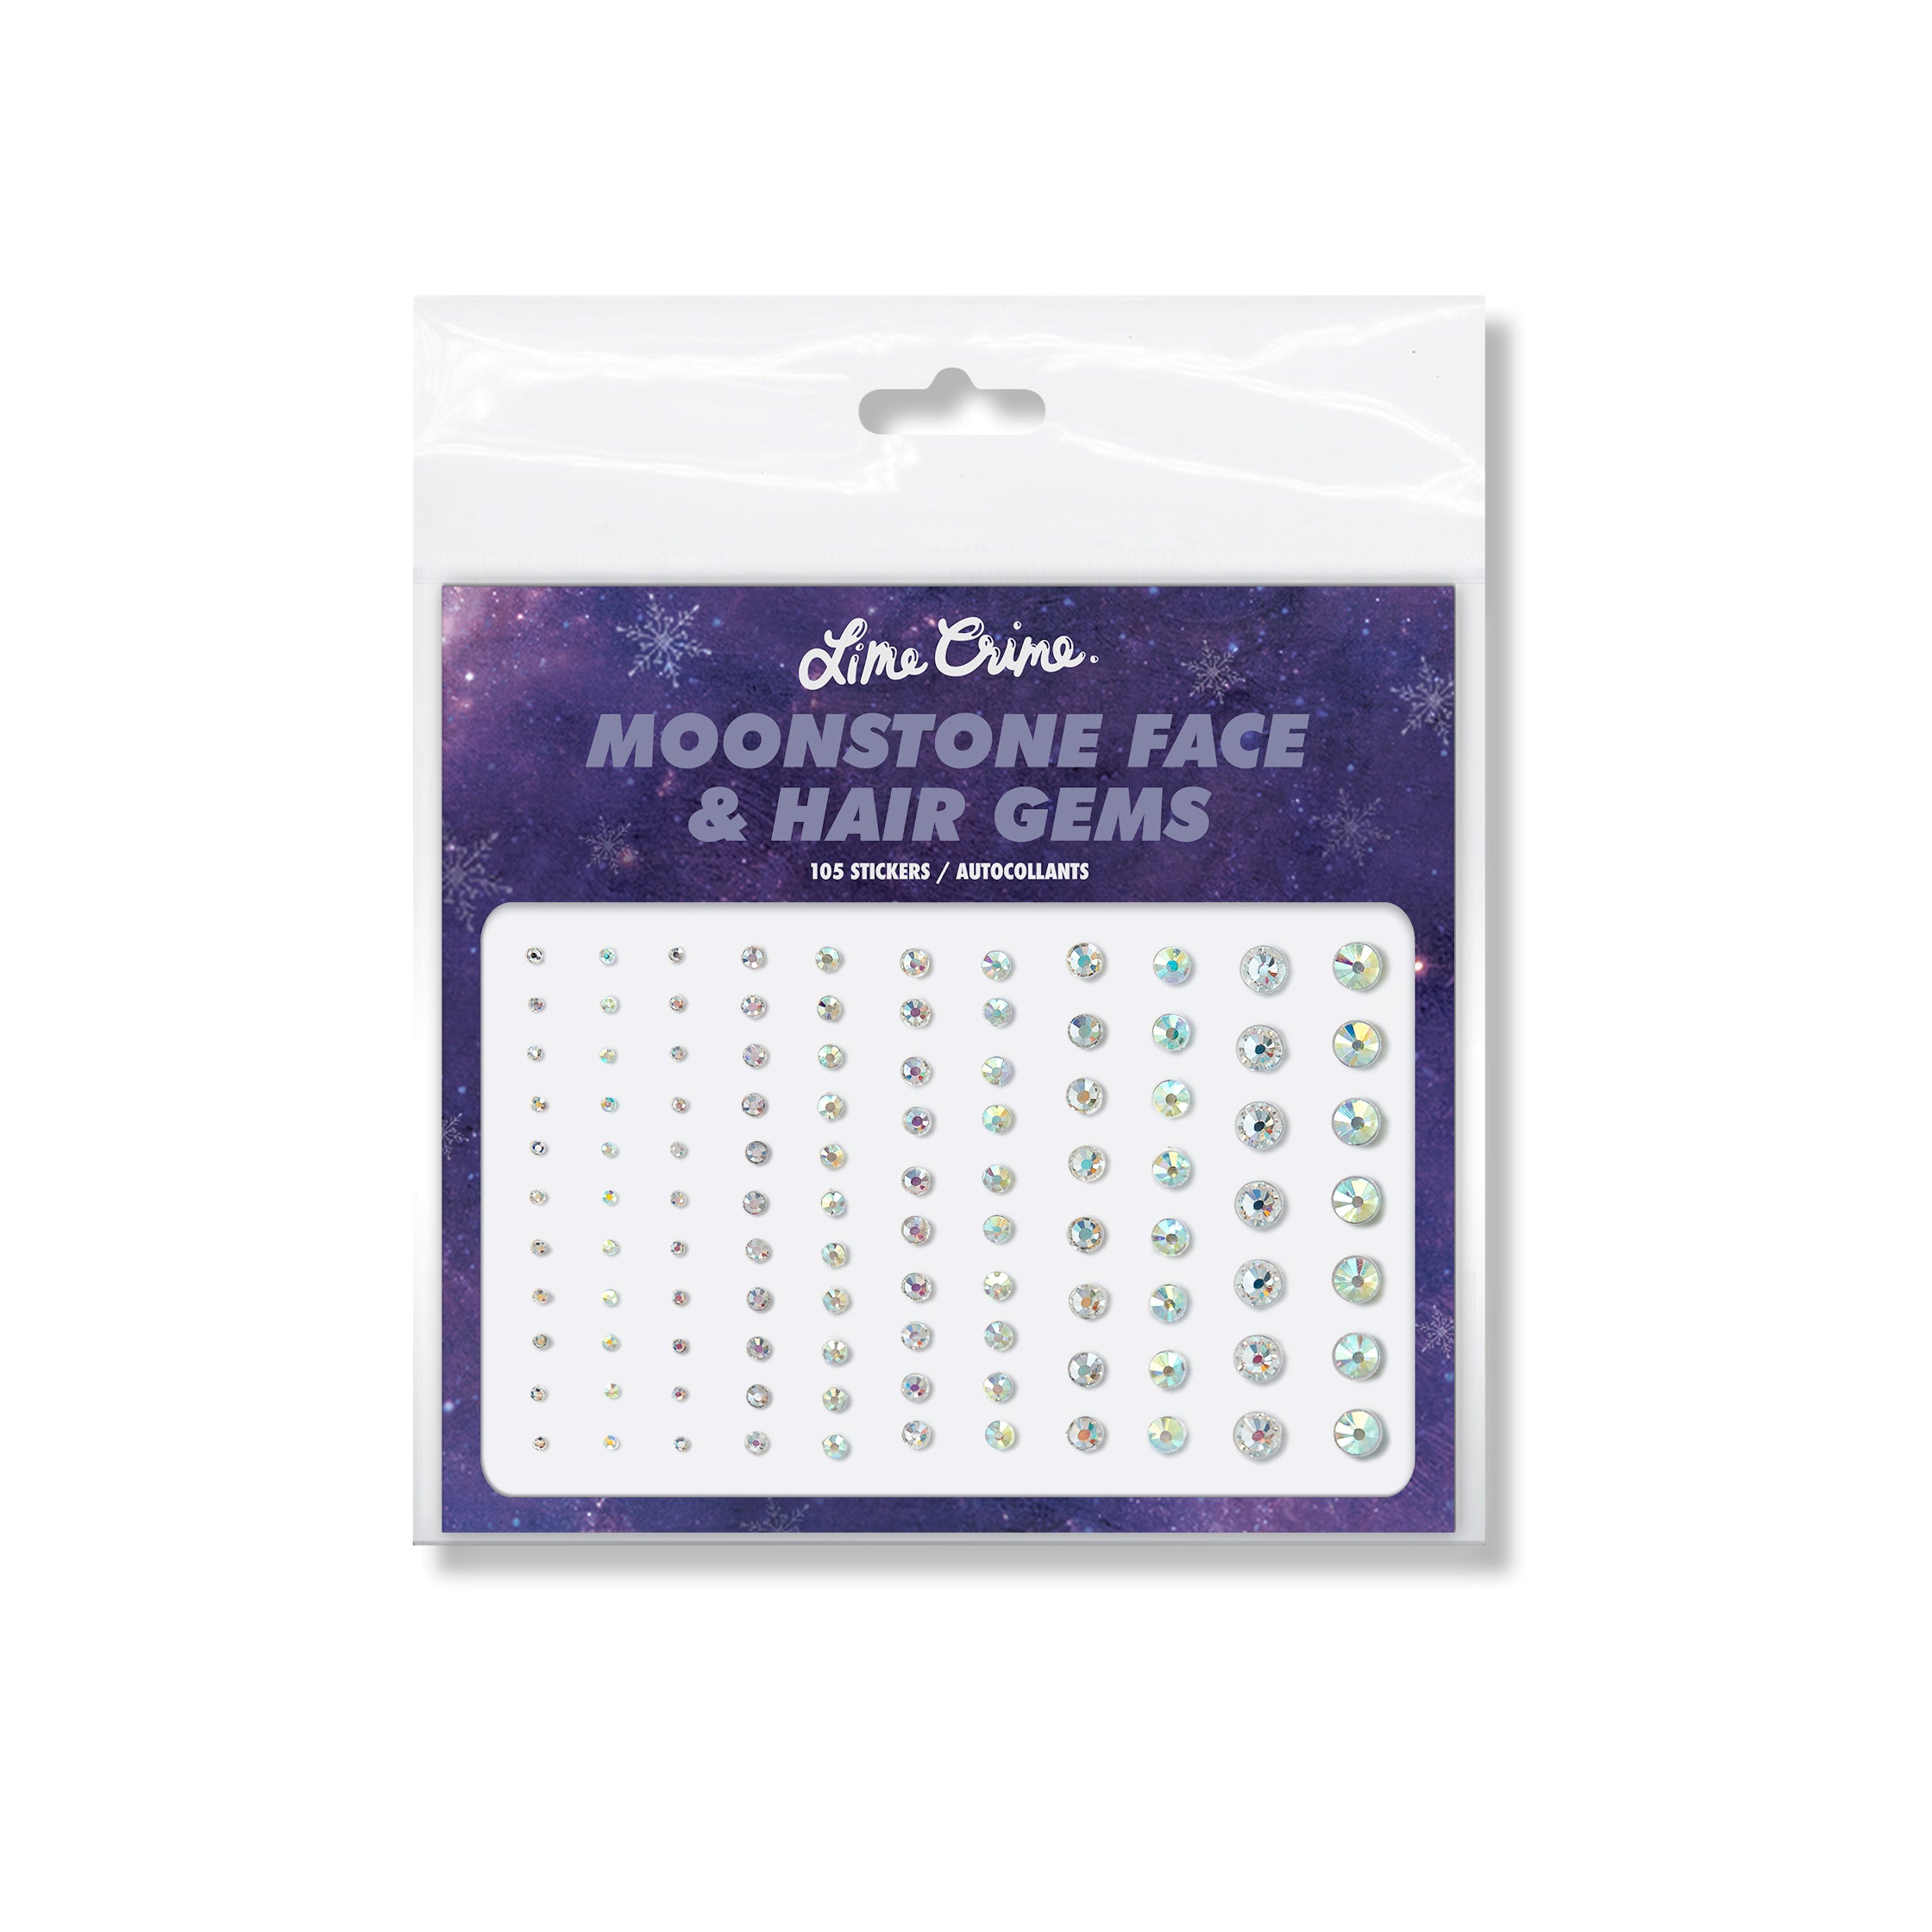 Moonstone Face & Hair Gems